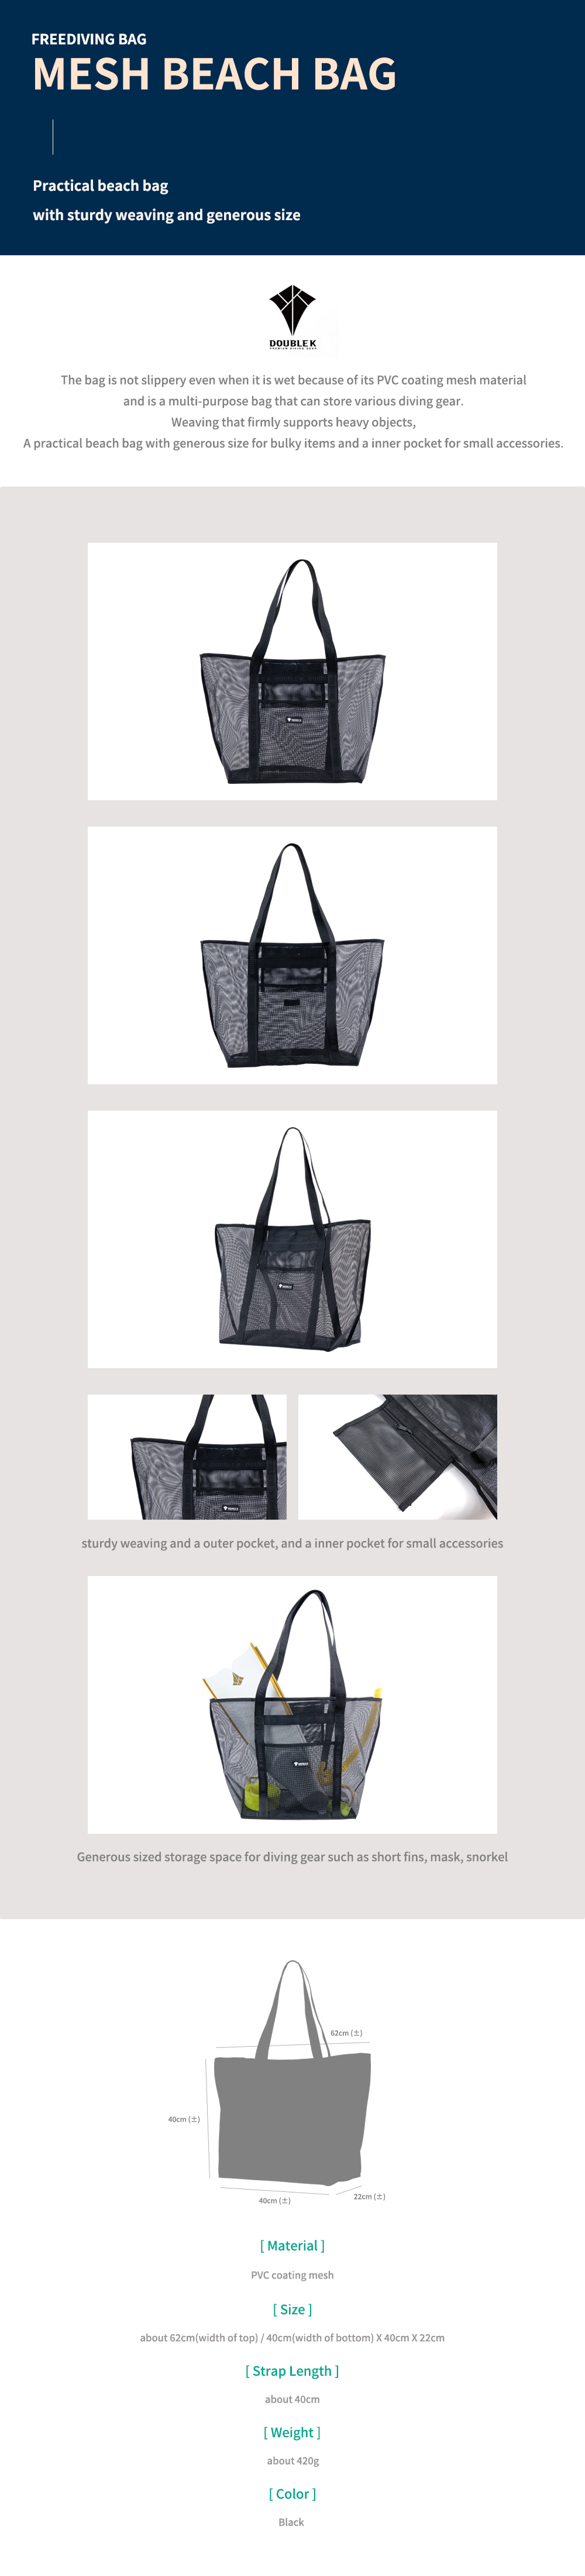 bag product image-S1L6